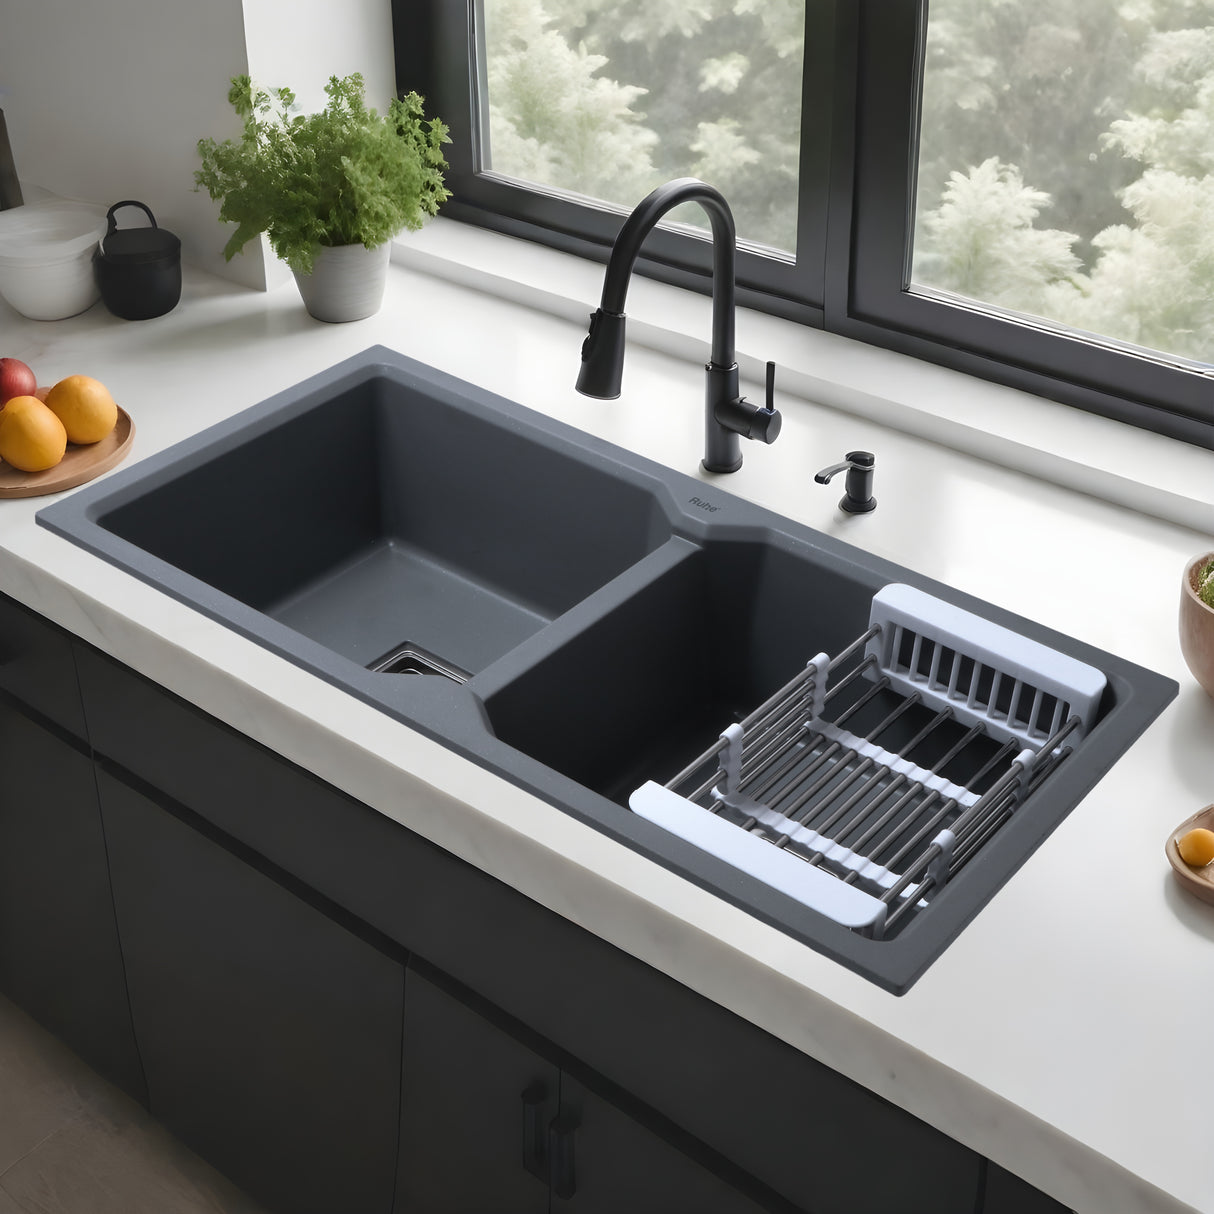 Quartz Double Bowl Kitchen Sink - Smoke Grey (37 x 18 x 9 inches) - by Ruhe®